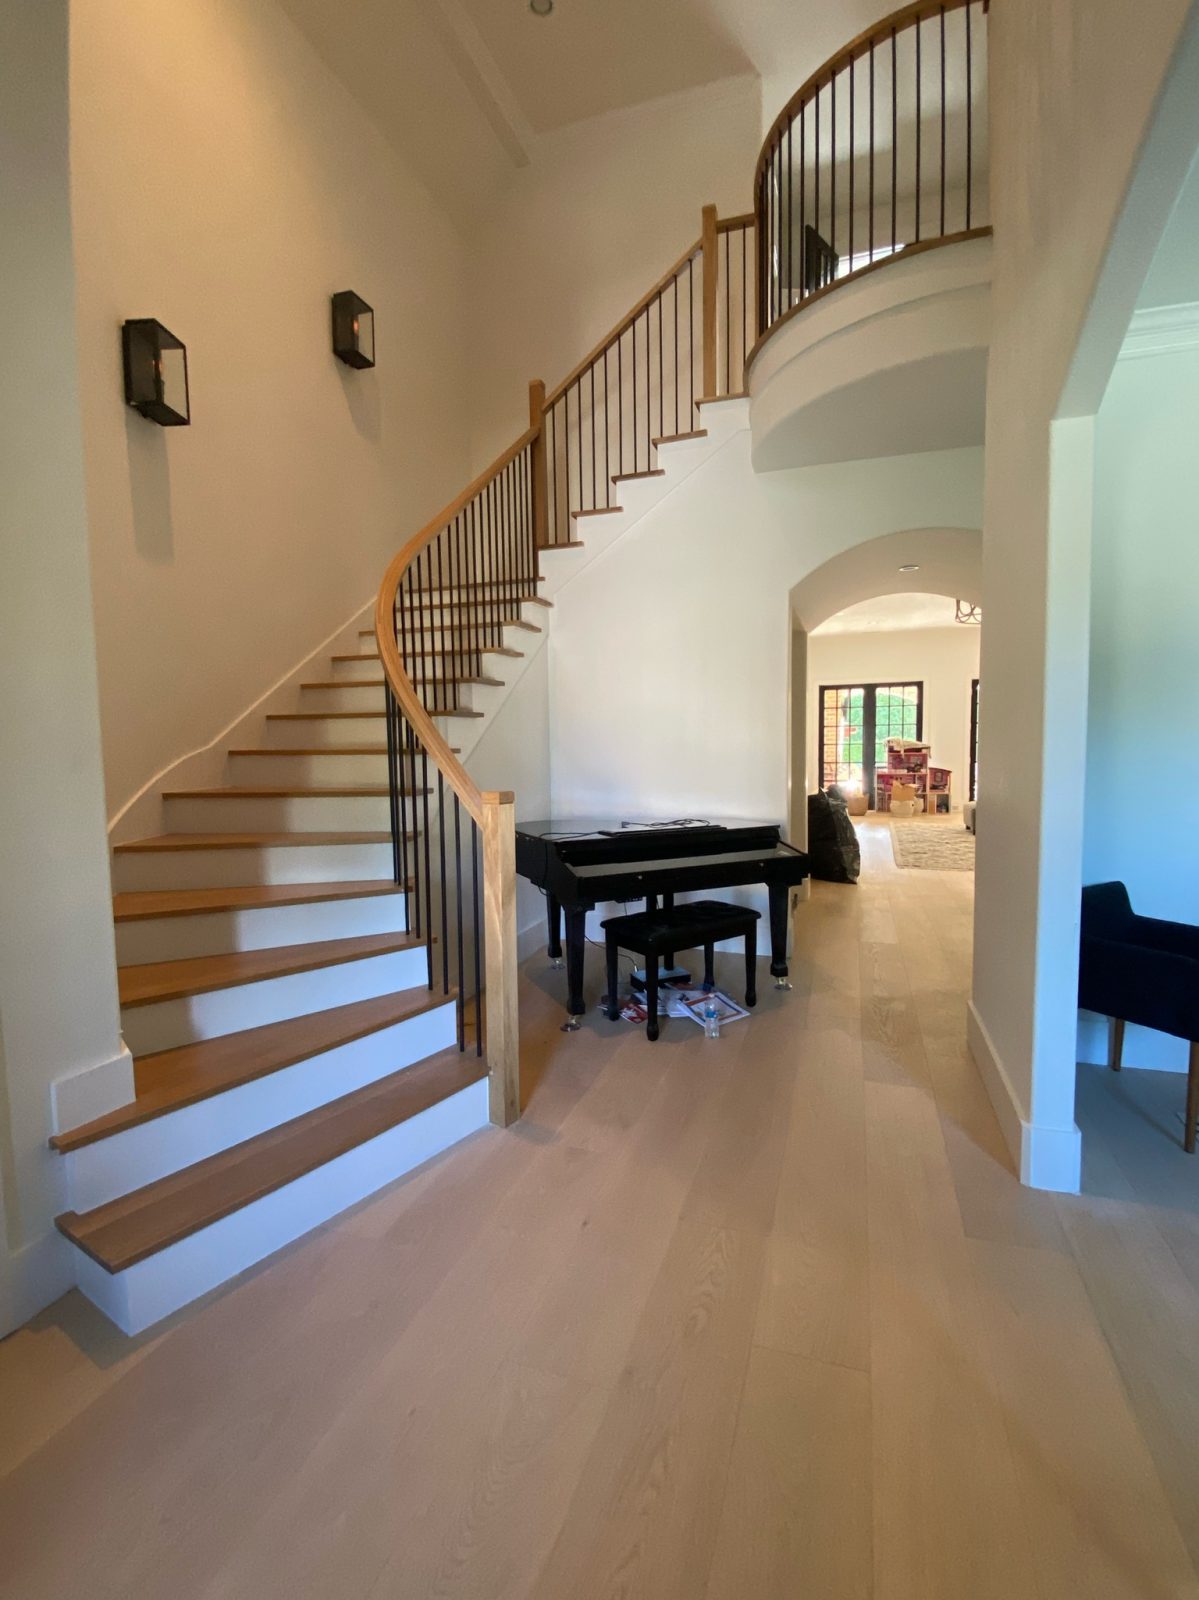 Stair Case White Oak with White Oak Floors